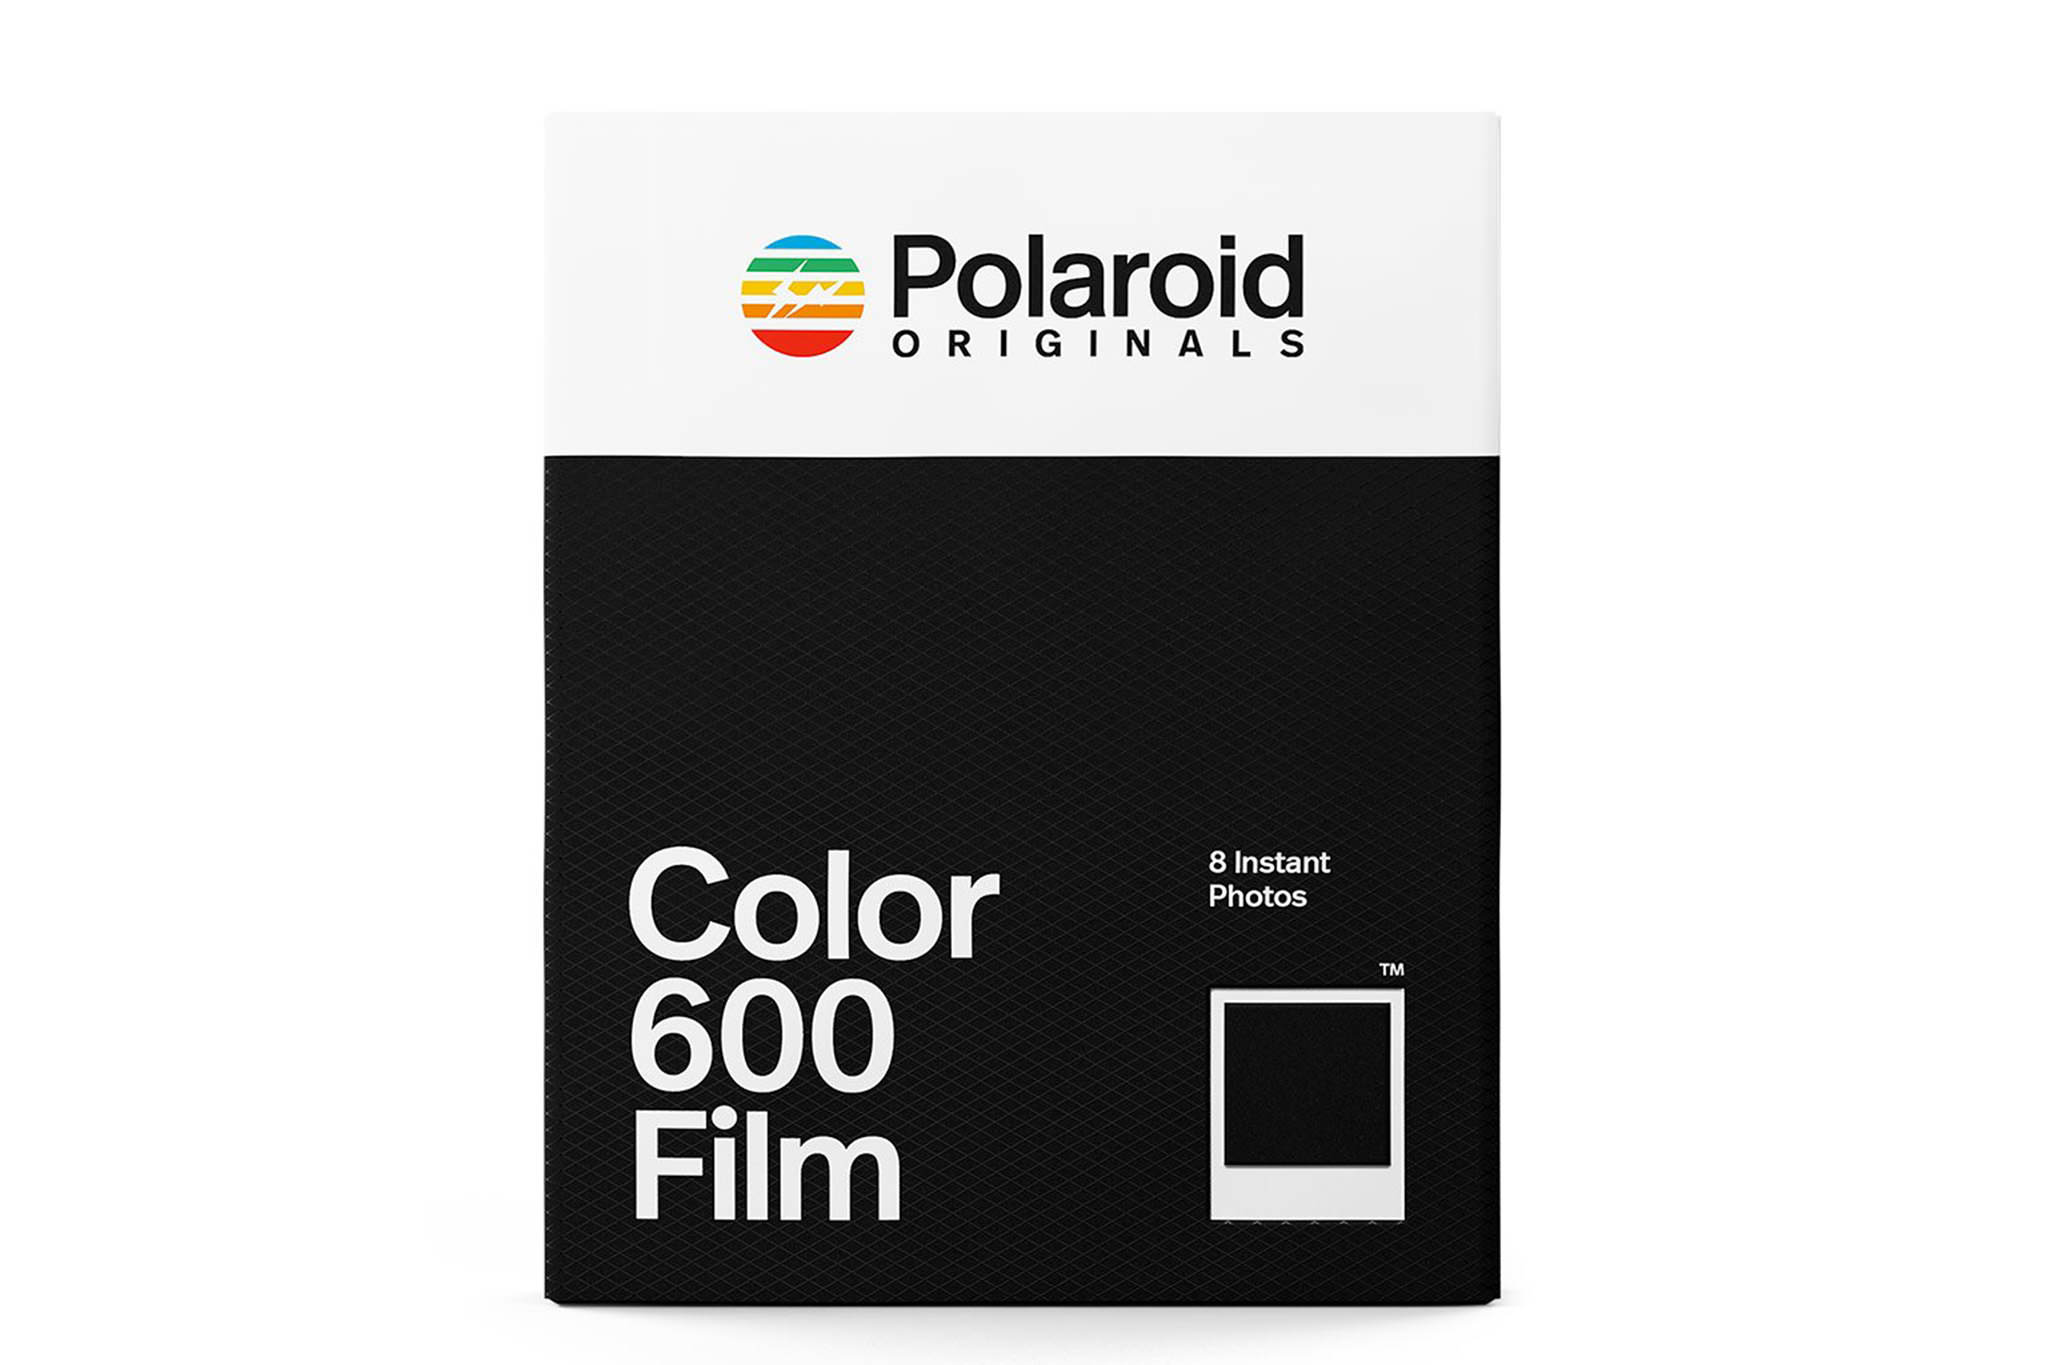 Polaroid Originals Color Film for 600 Fragment Edition - All Information